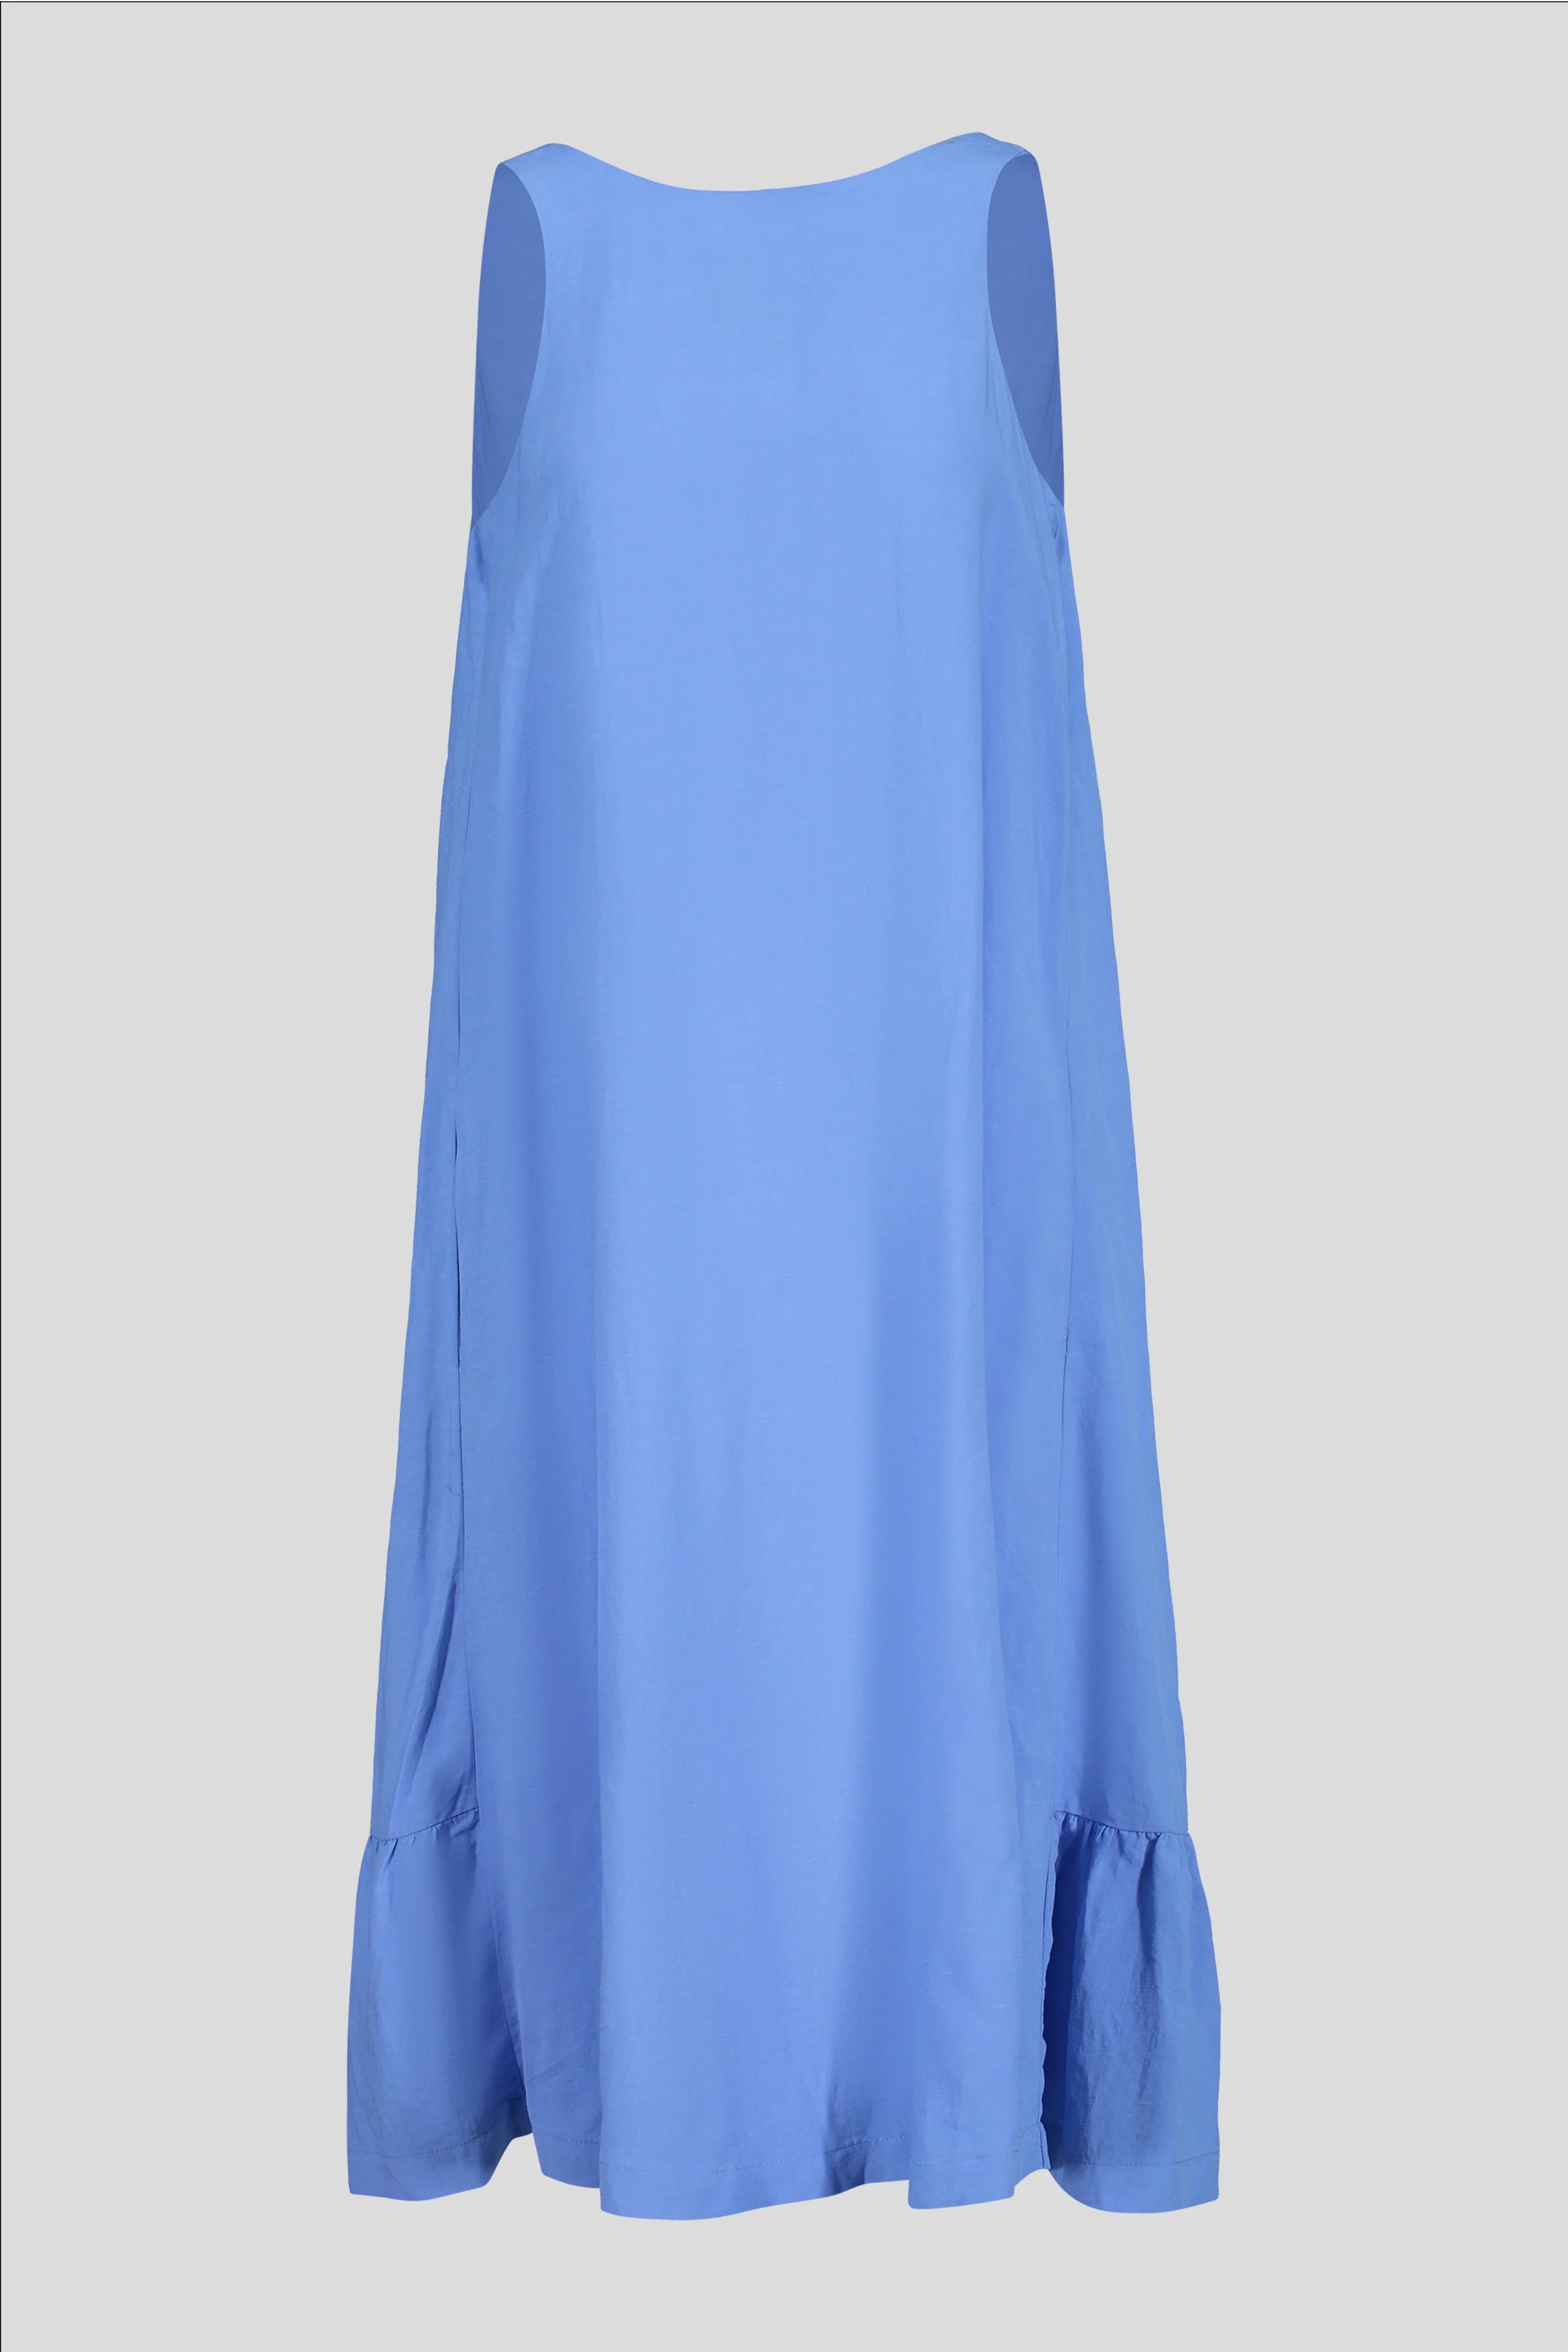 Tara Sleeveless Ruffle Dress in Blue Linen